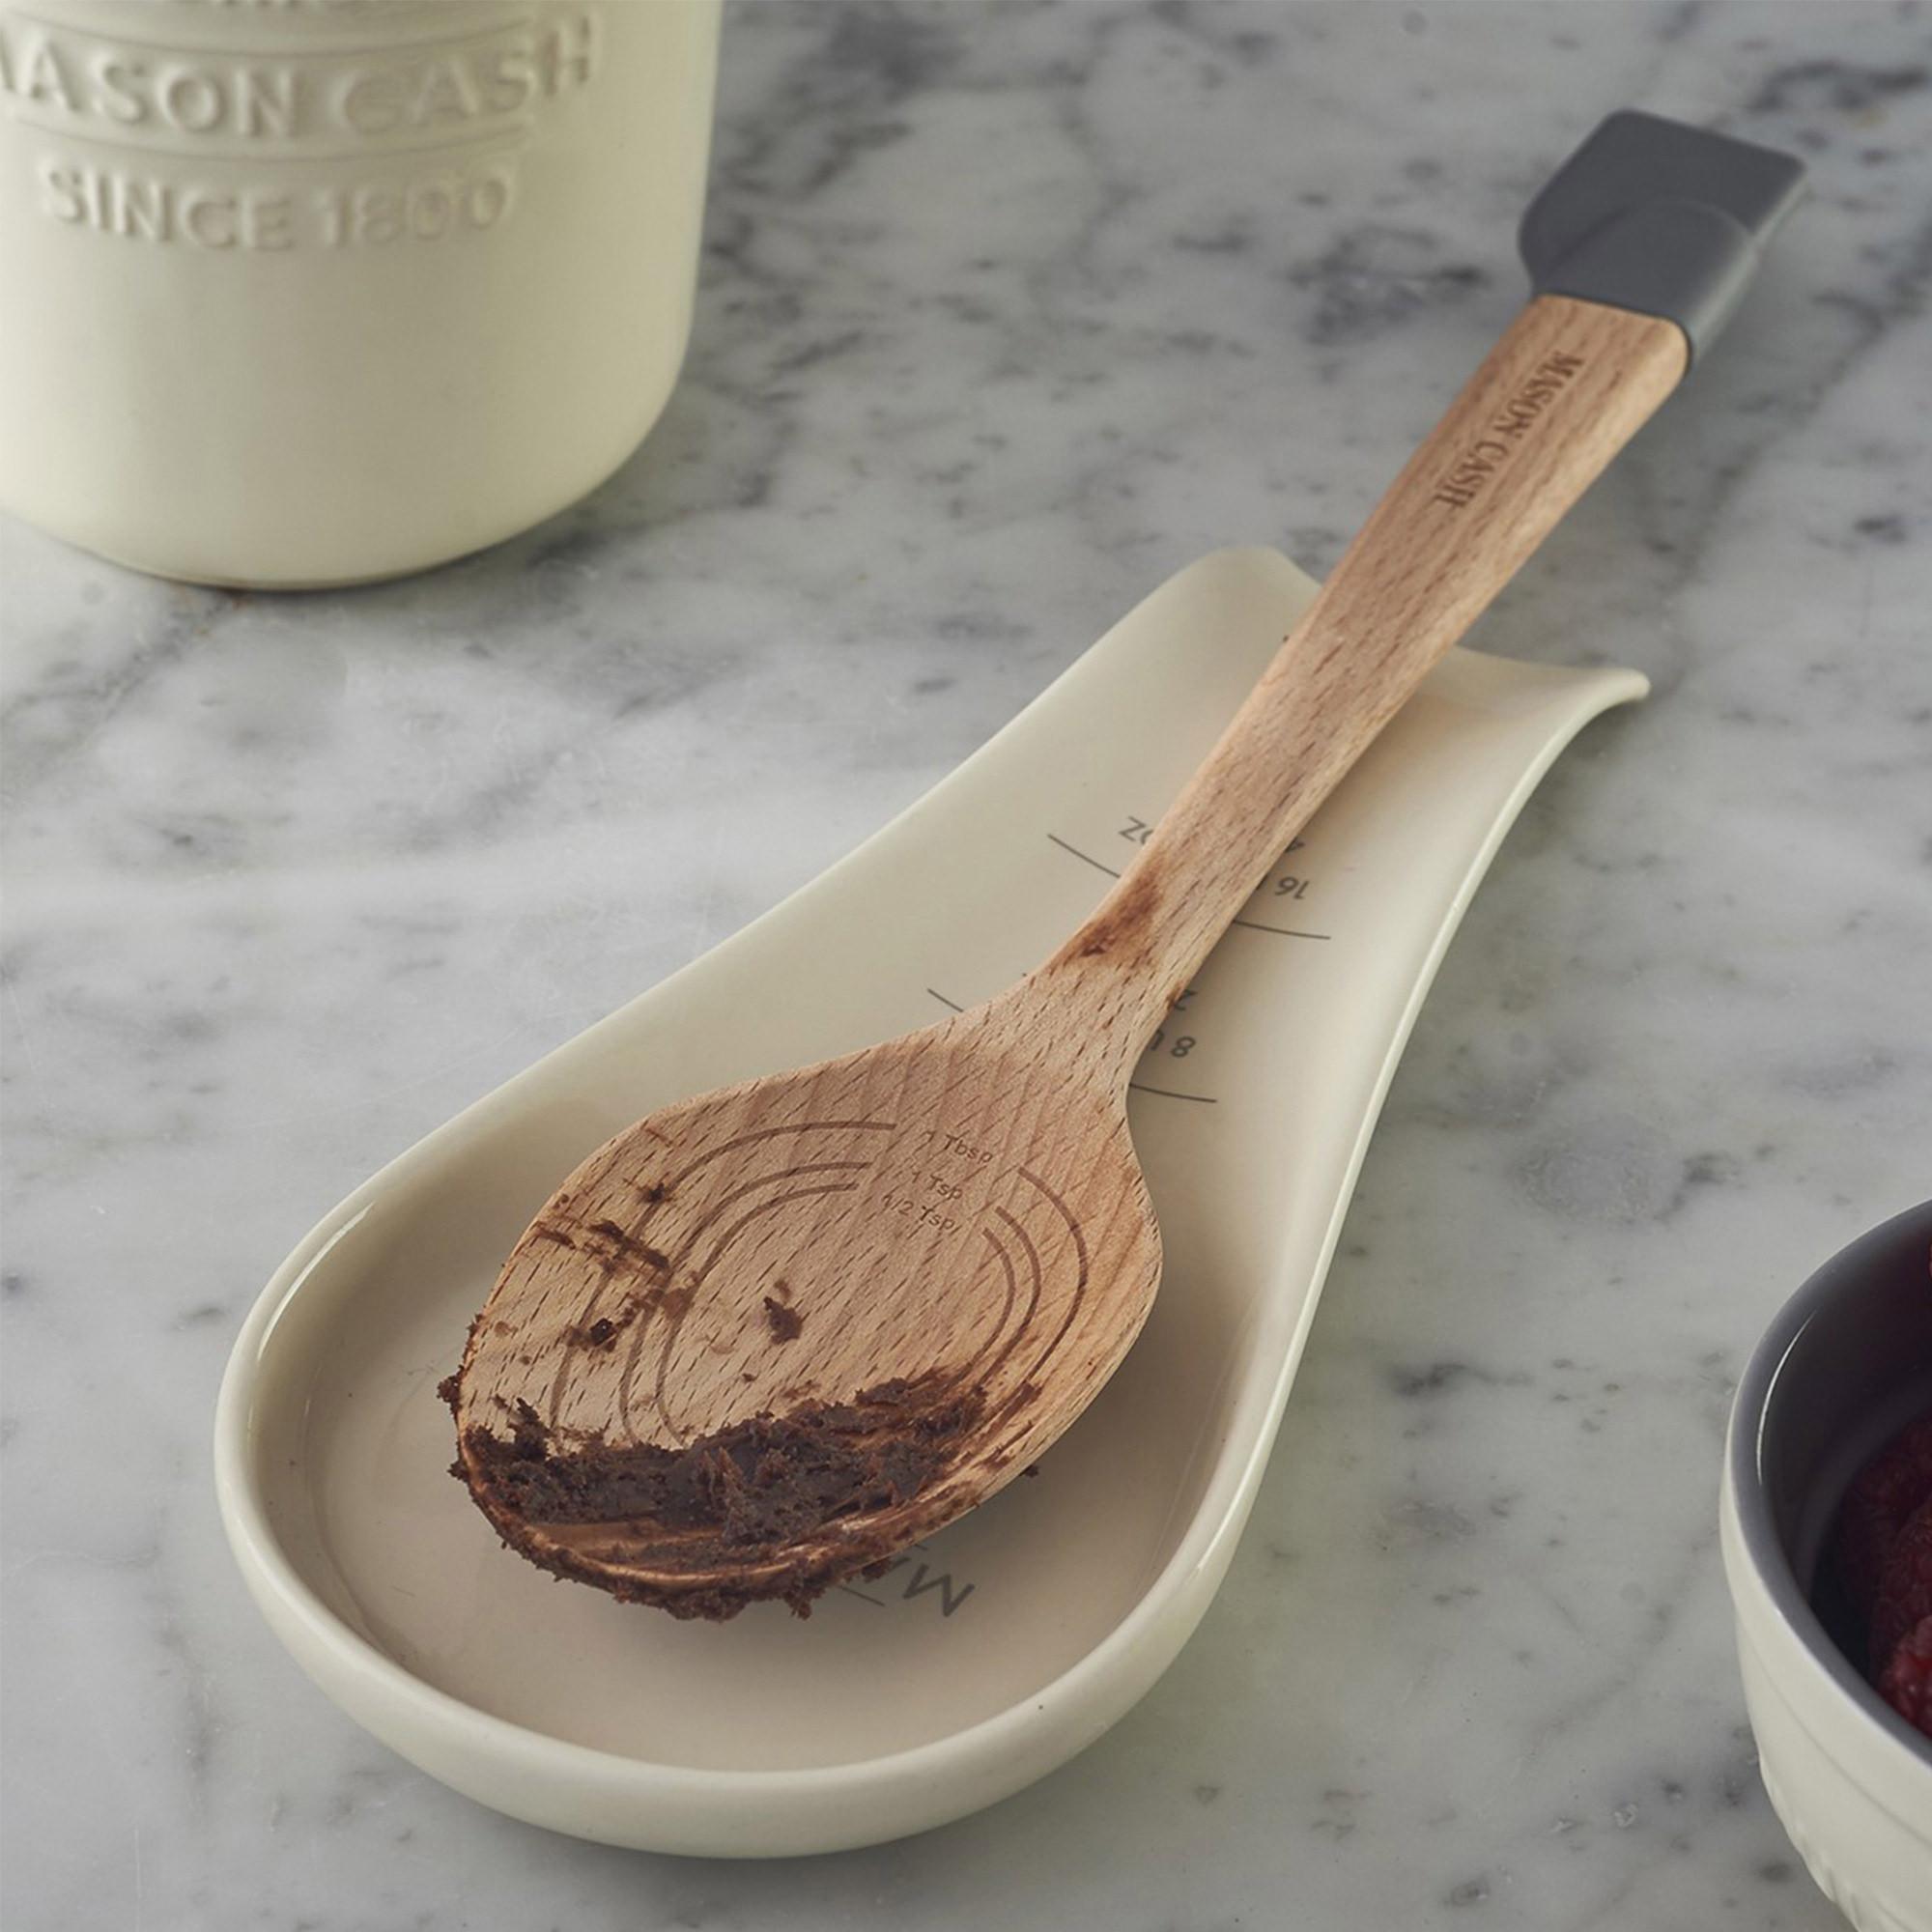 Mason Cash Innovative Kitchen Spoon Rest Image 3